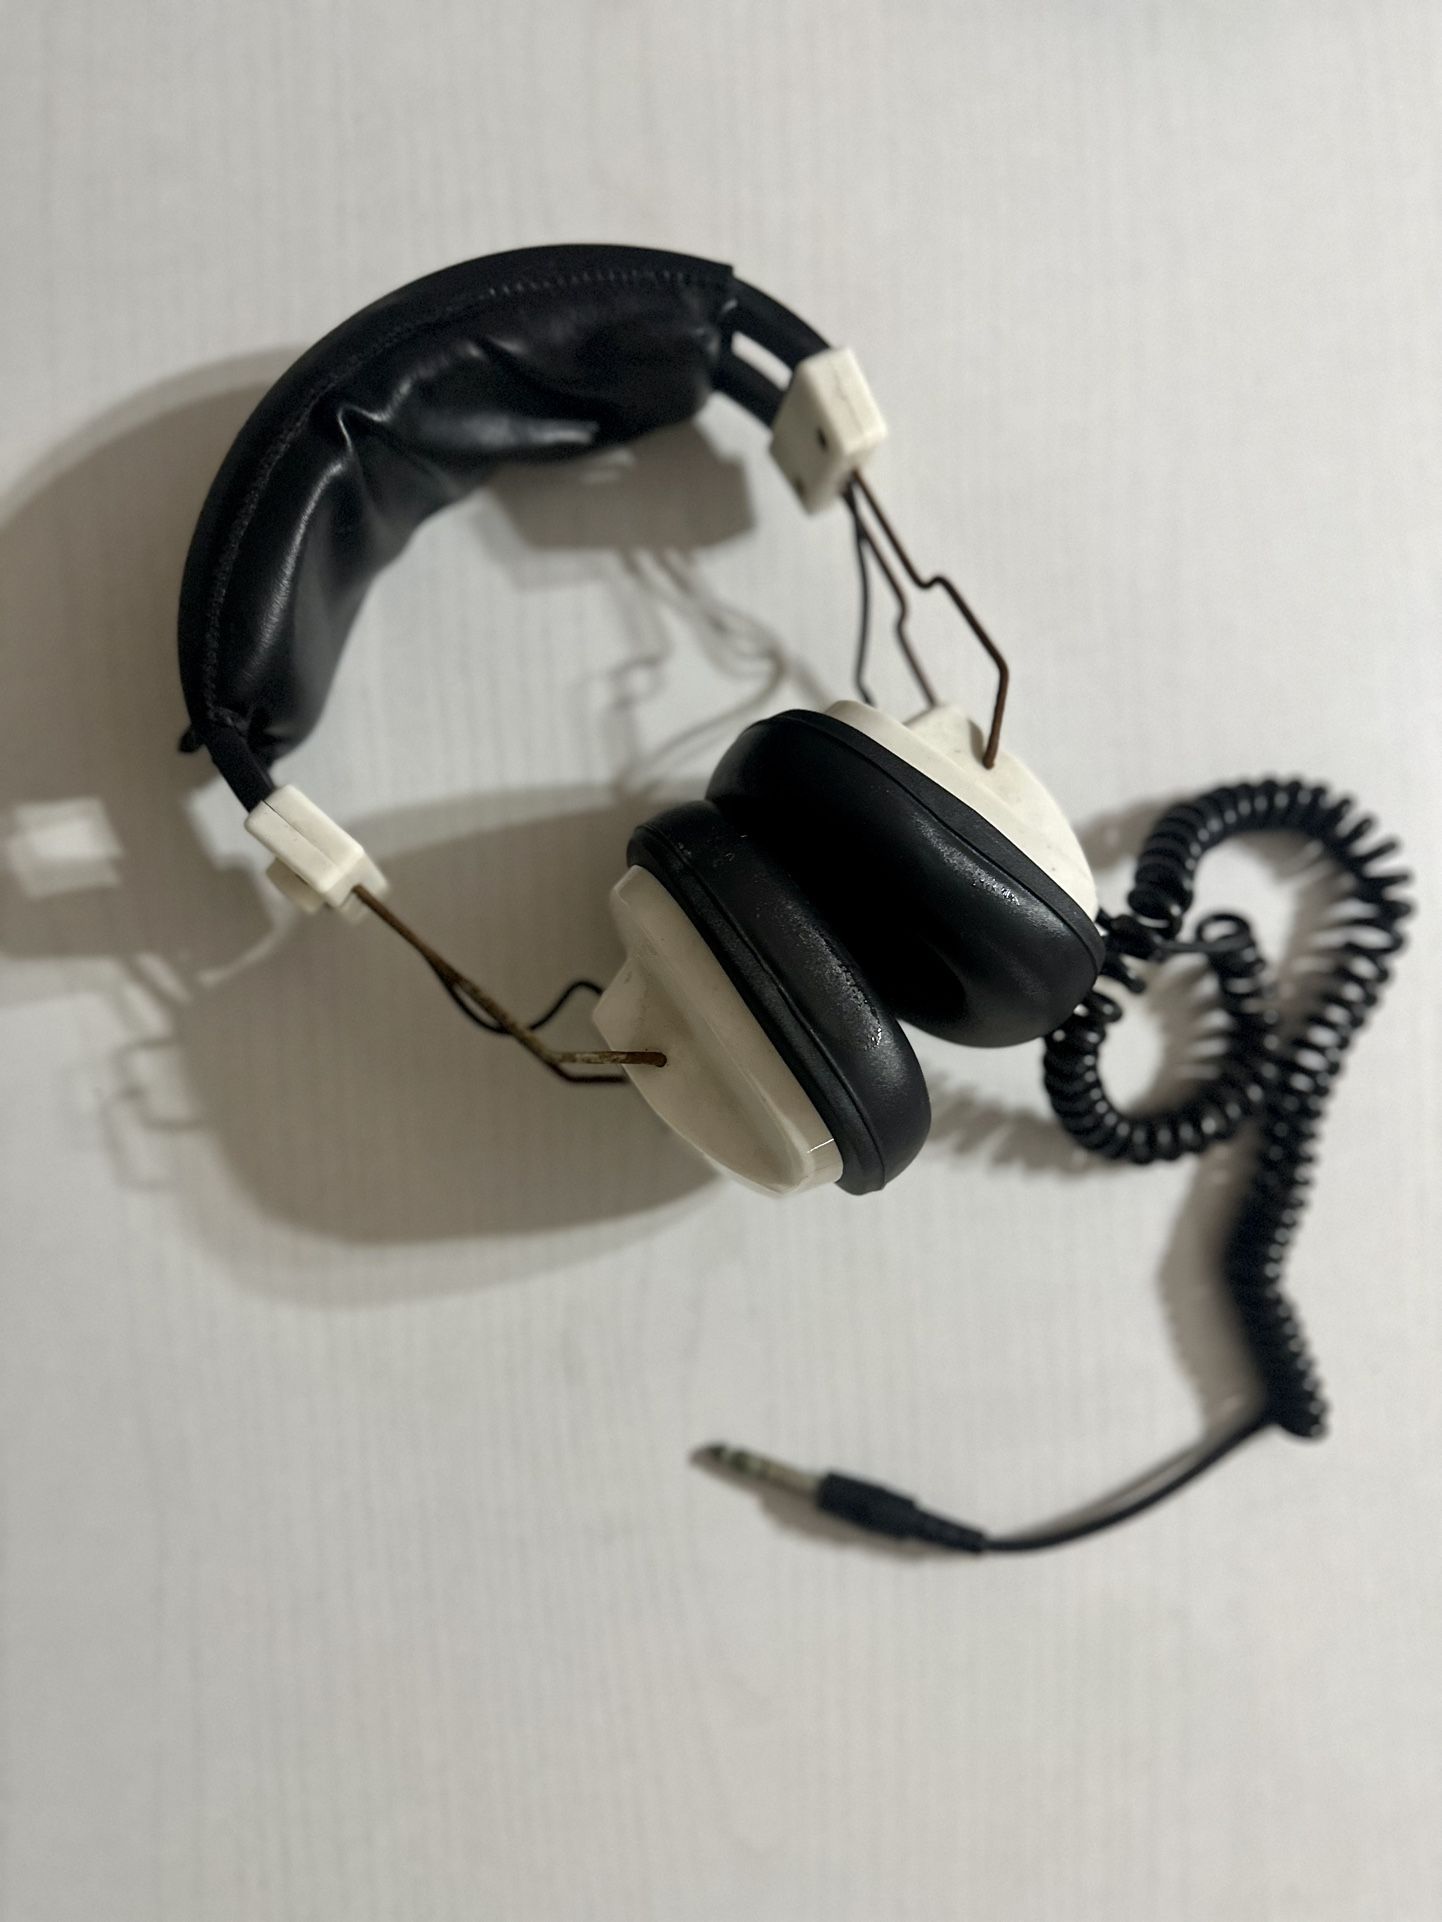 Vintage Stereo Headphones Plug In White FF 20 Over ear